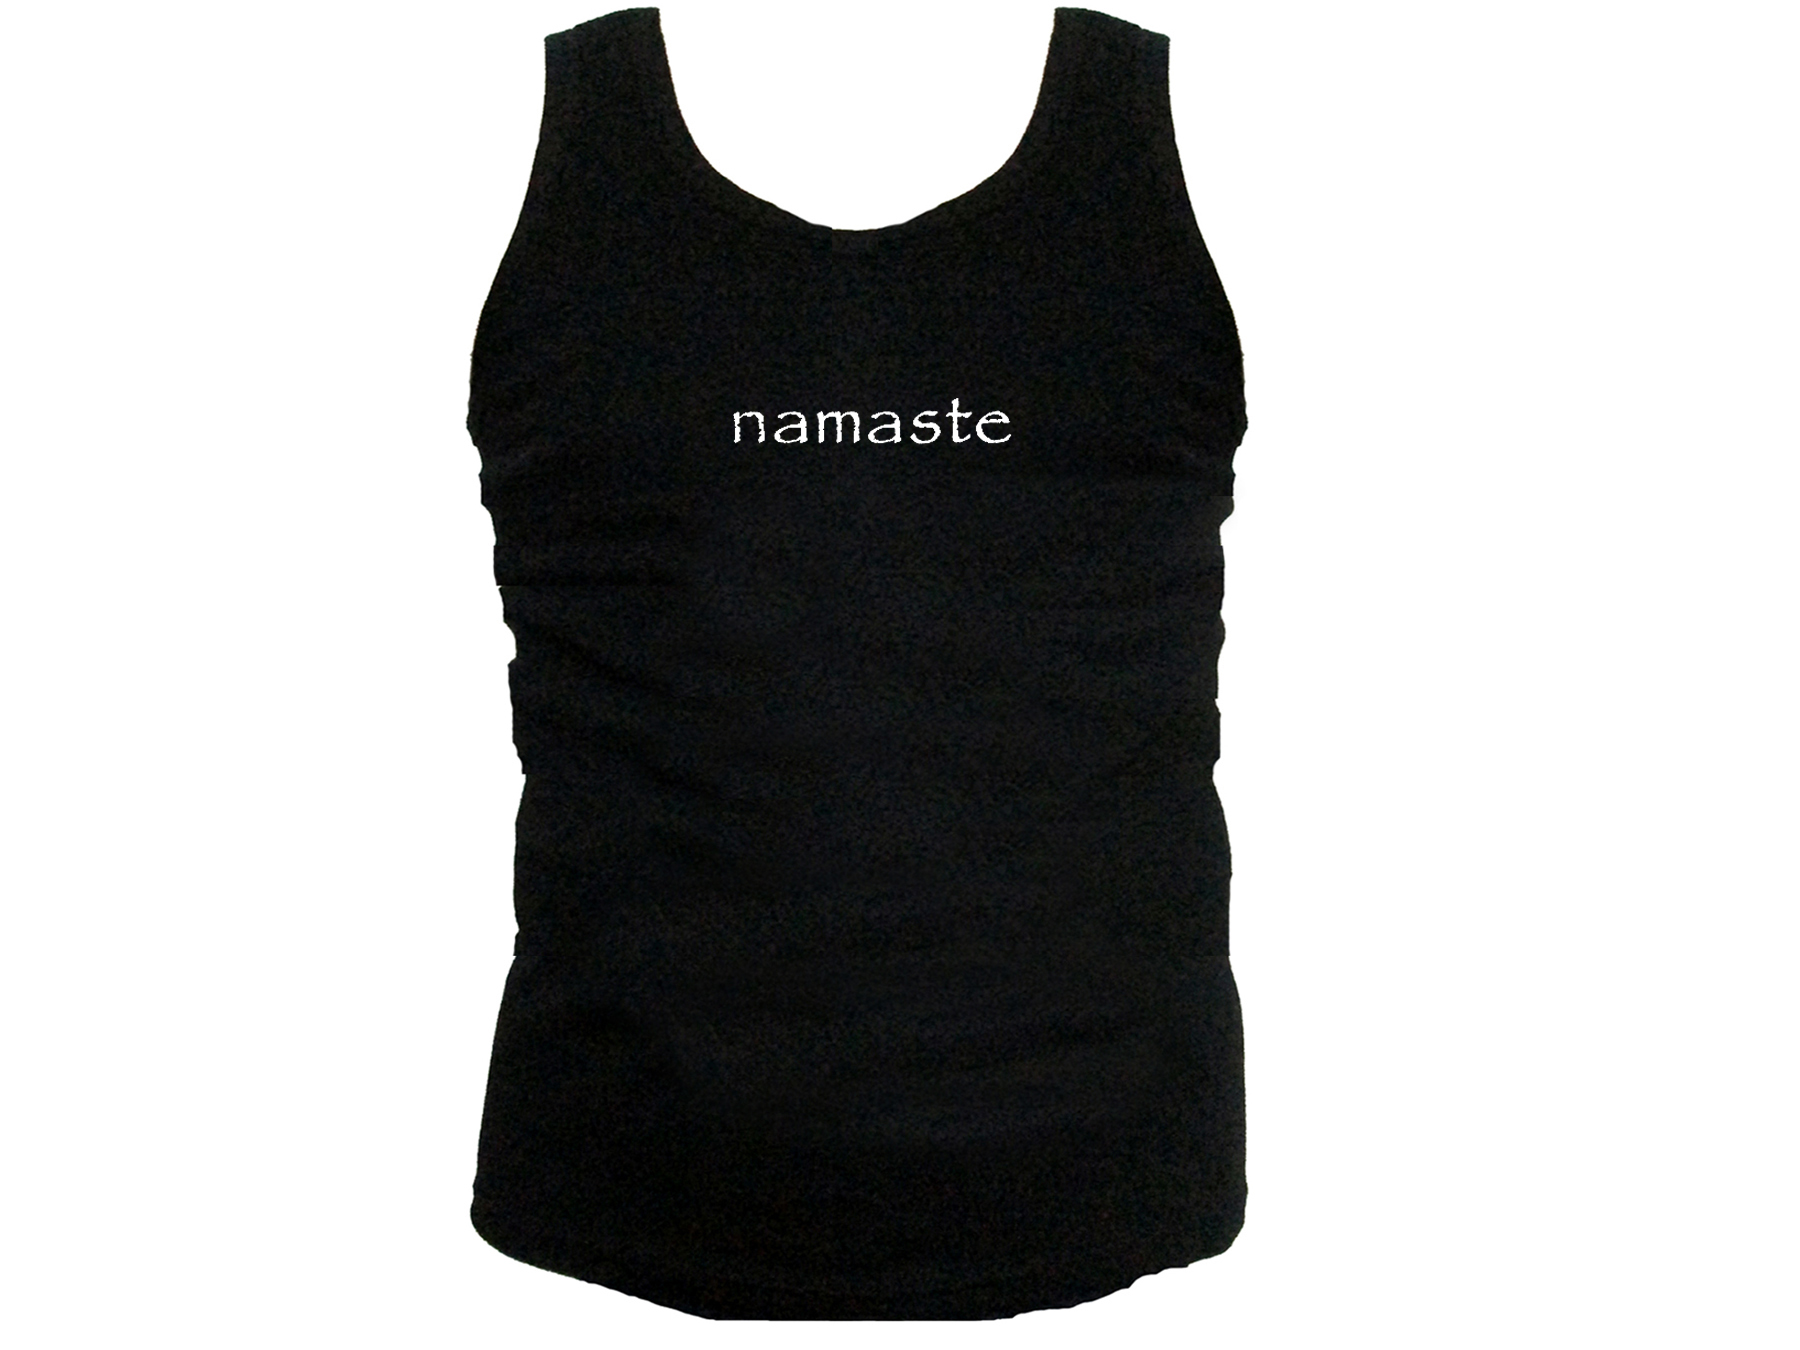 Namaste yoga wear tank top